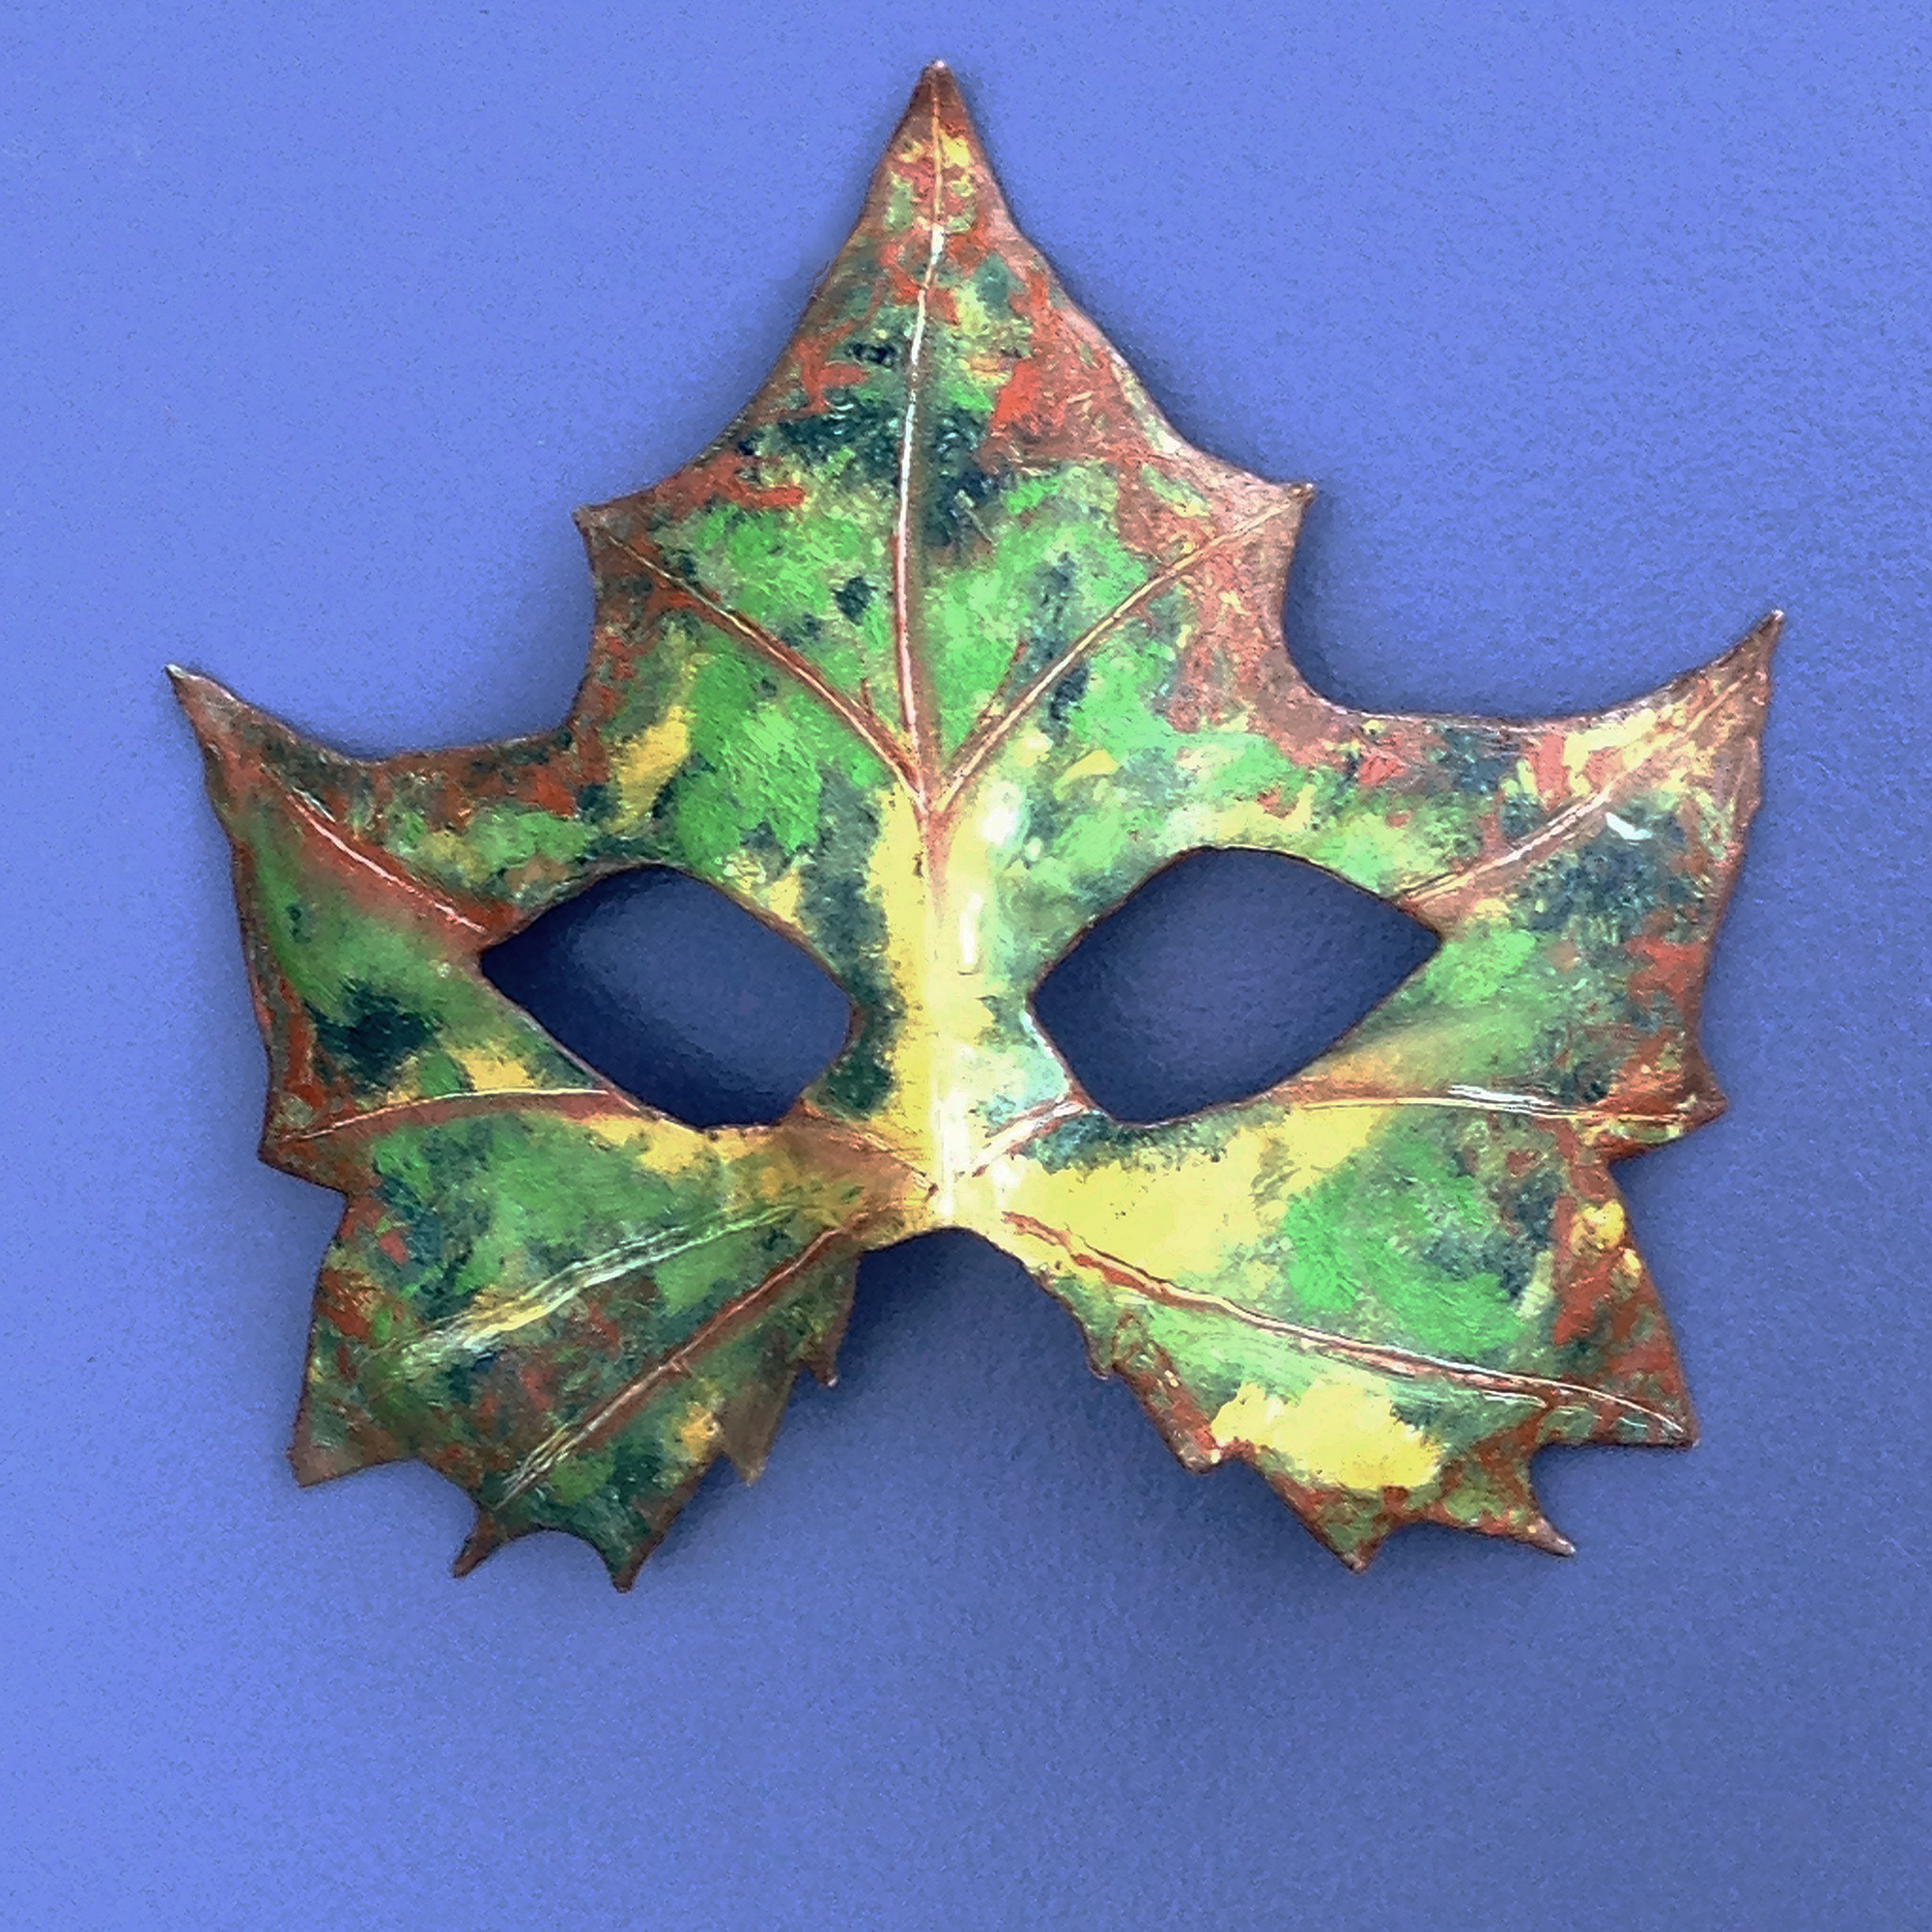    Maple Leaf Mask I,   2016. Oil on paper mache. 